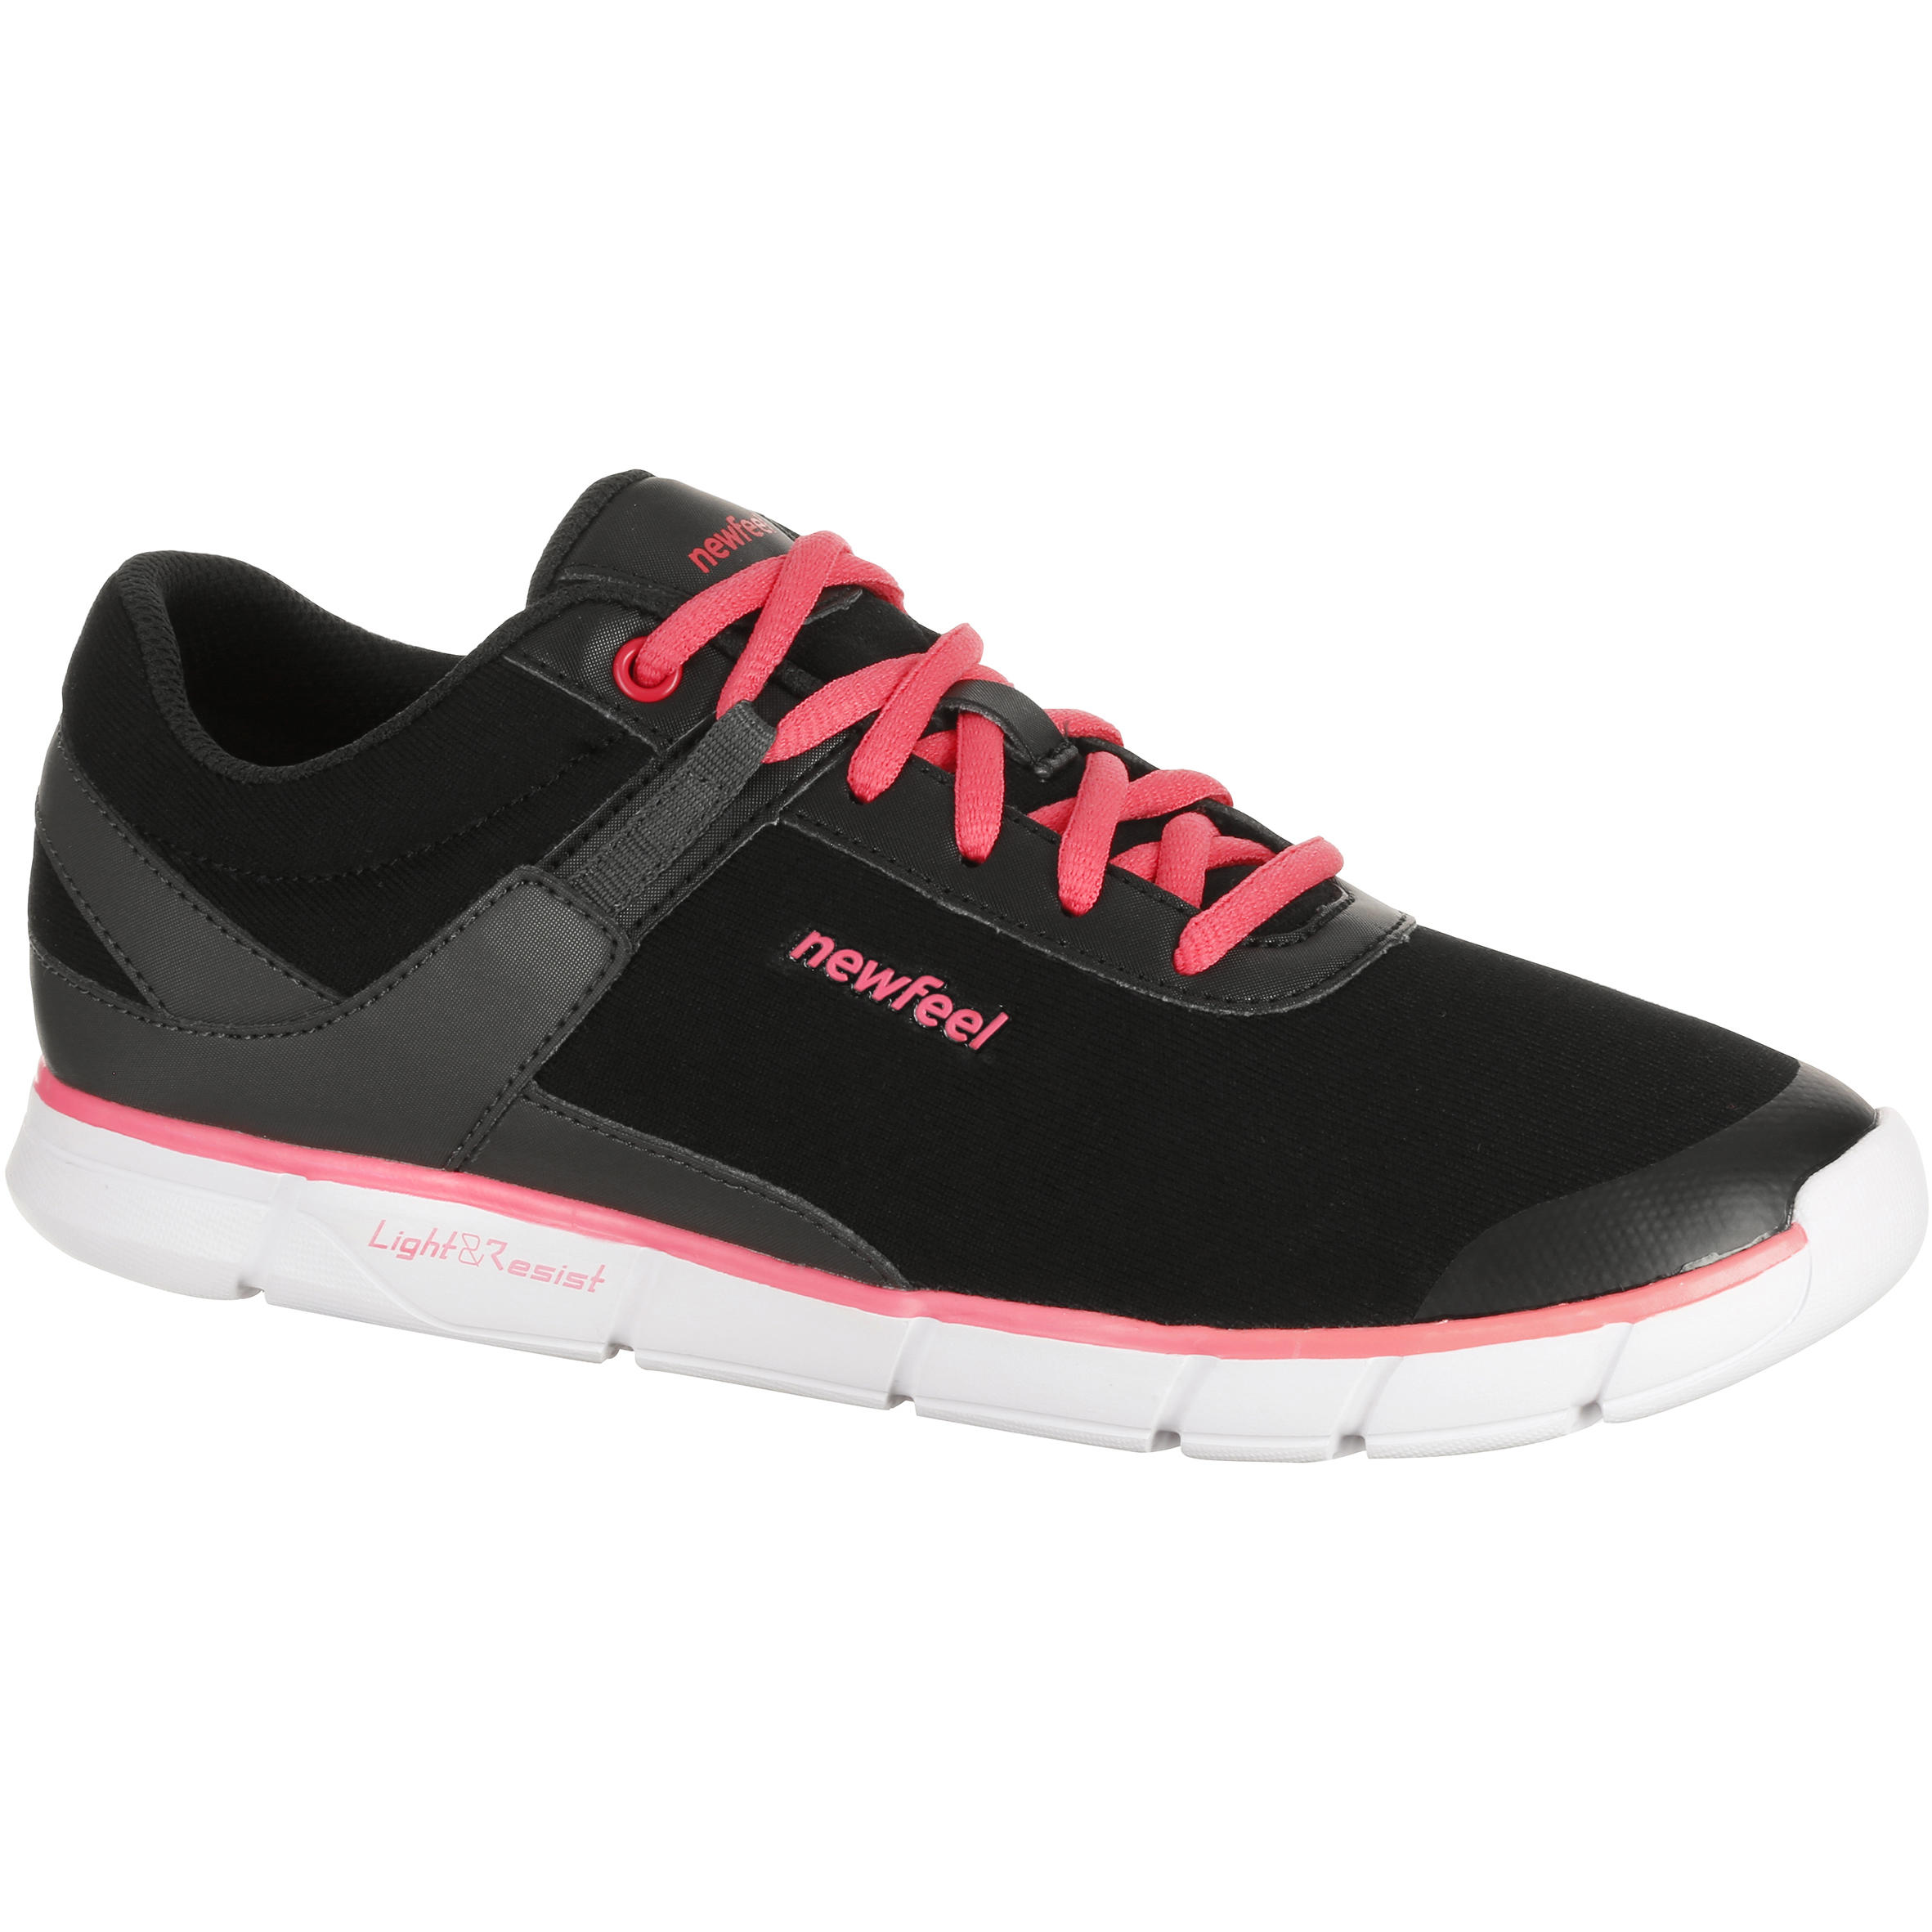 NEWFEEL Soft 540 summer women's active walking shoes black coral